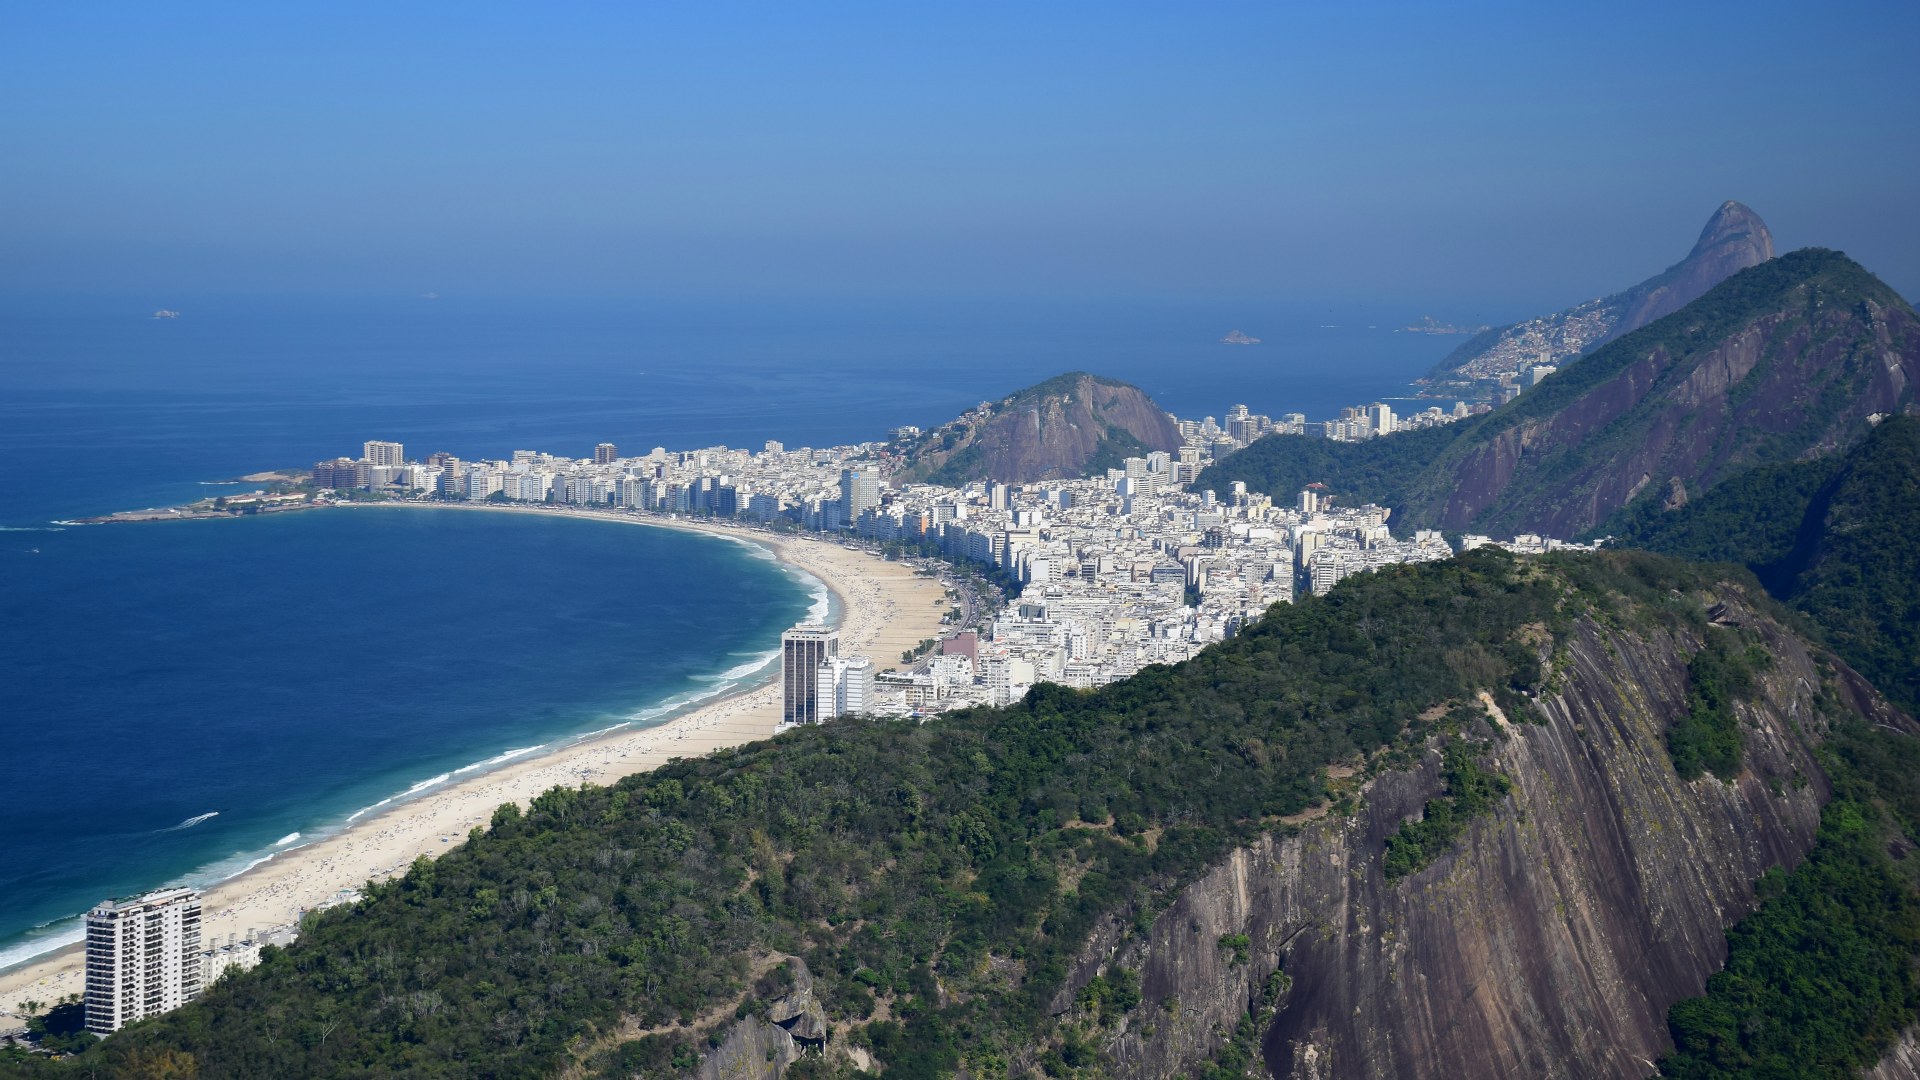 Copacabana from Sugarloaf Mountain, Rio de Janeiro